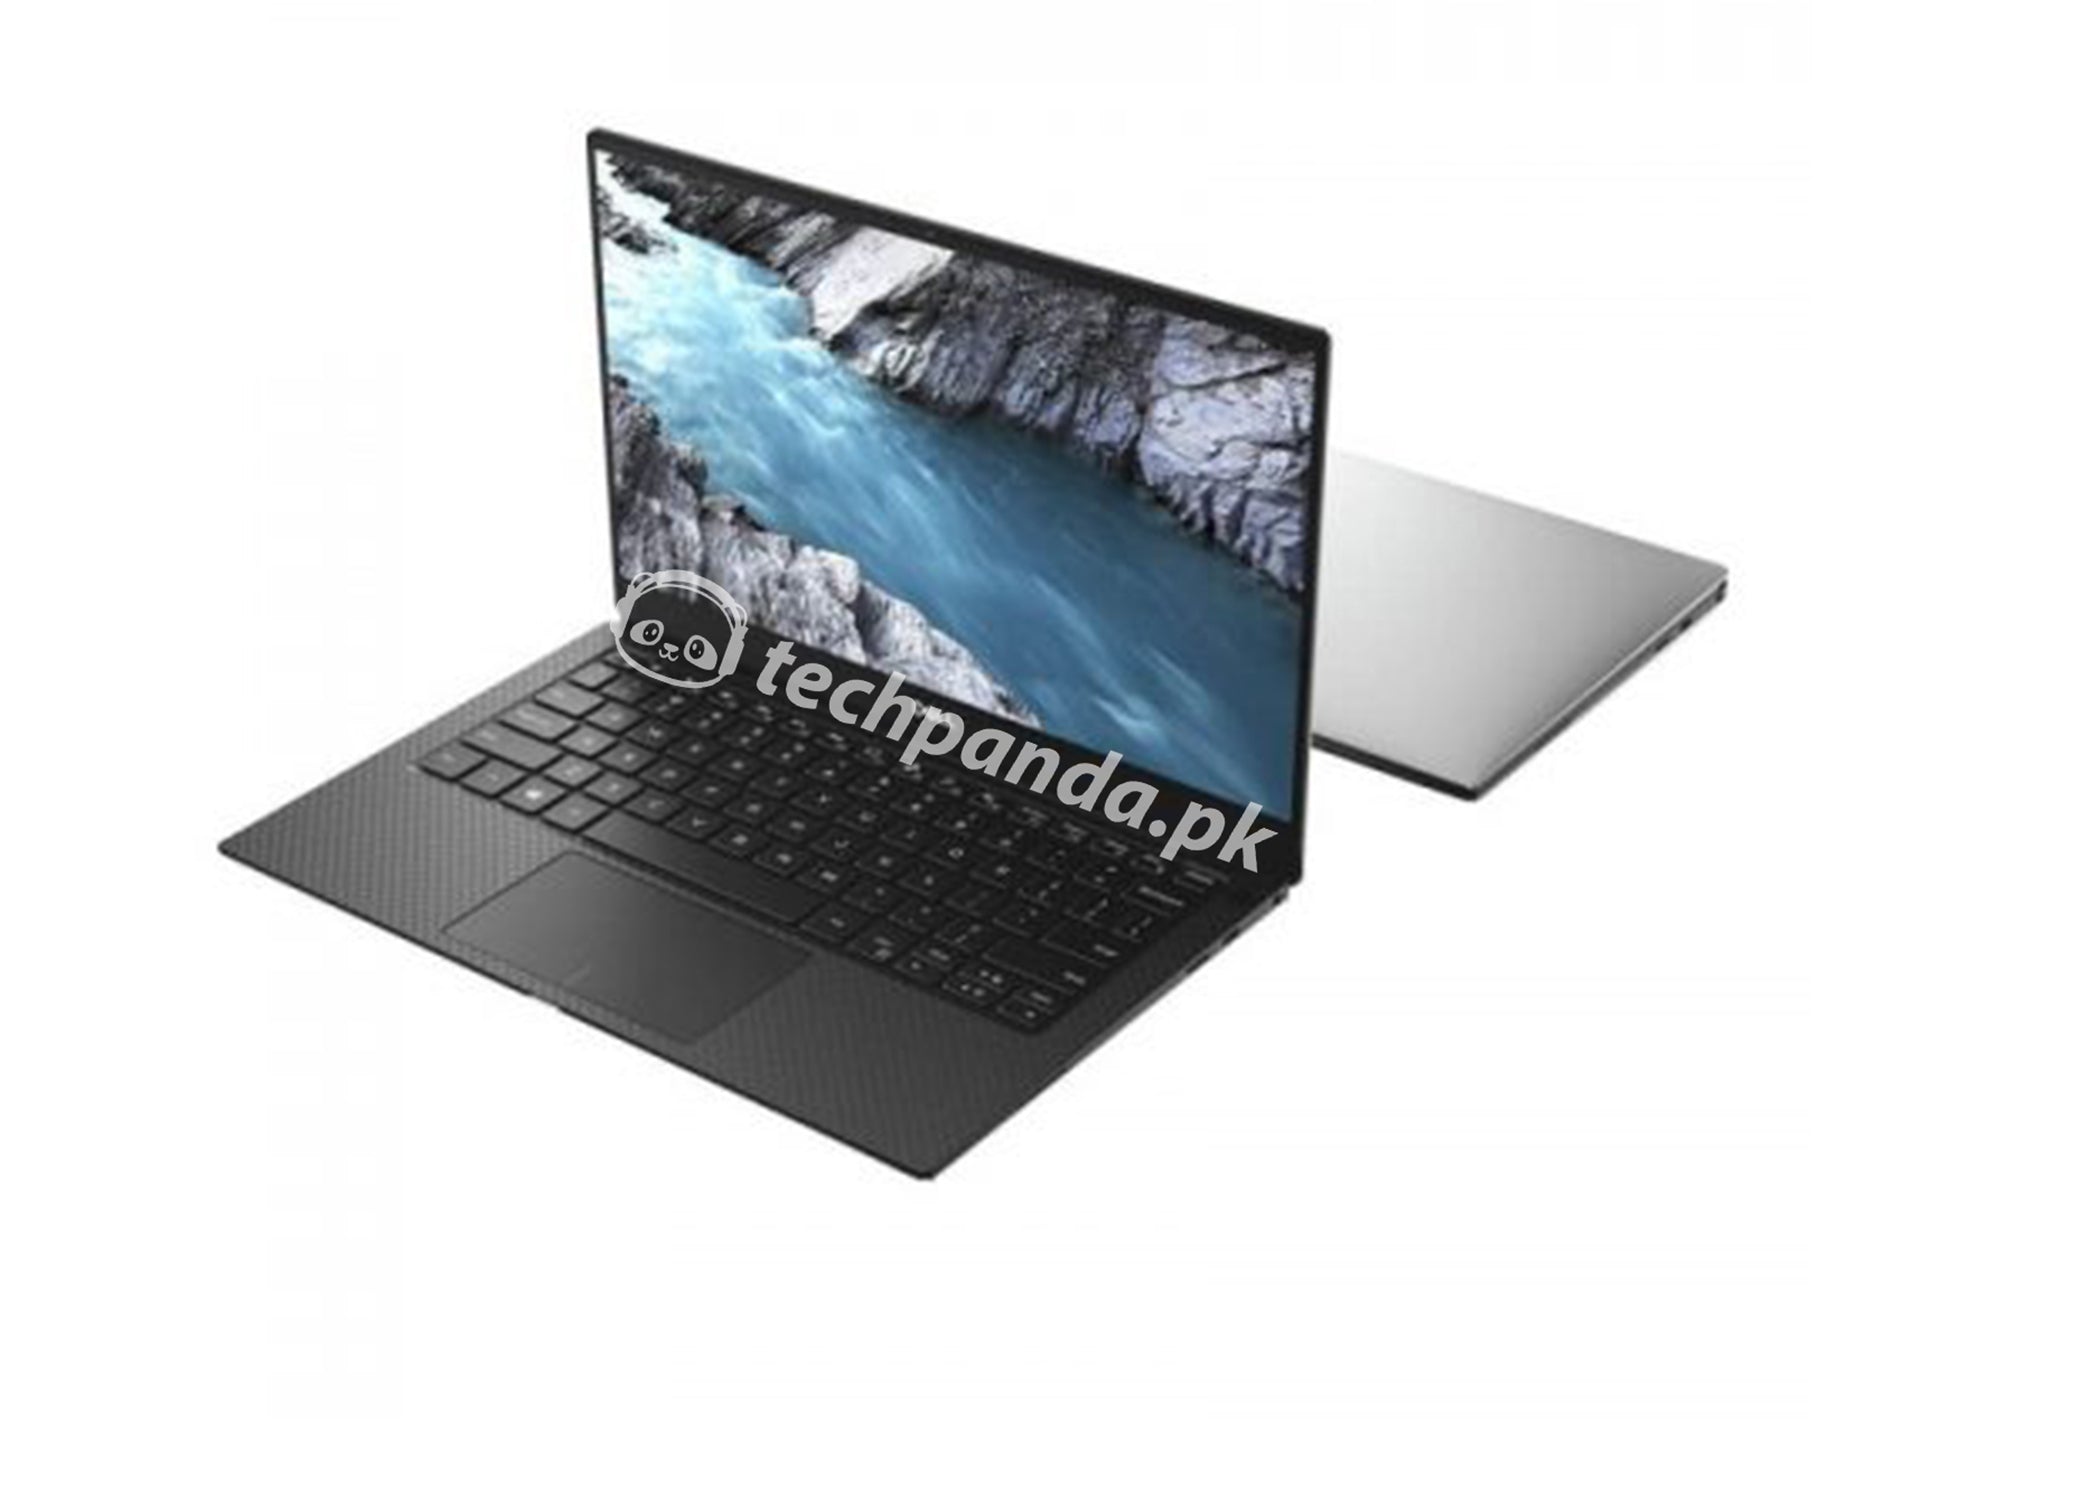 Dell XPS 13 9380 Laptop - 8th Generation Intel Core i7 256GB SSD Windows 10